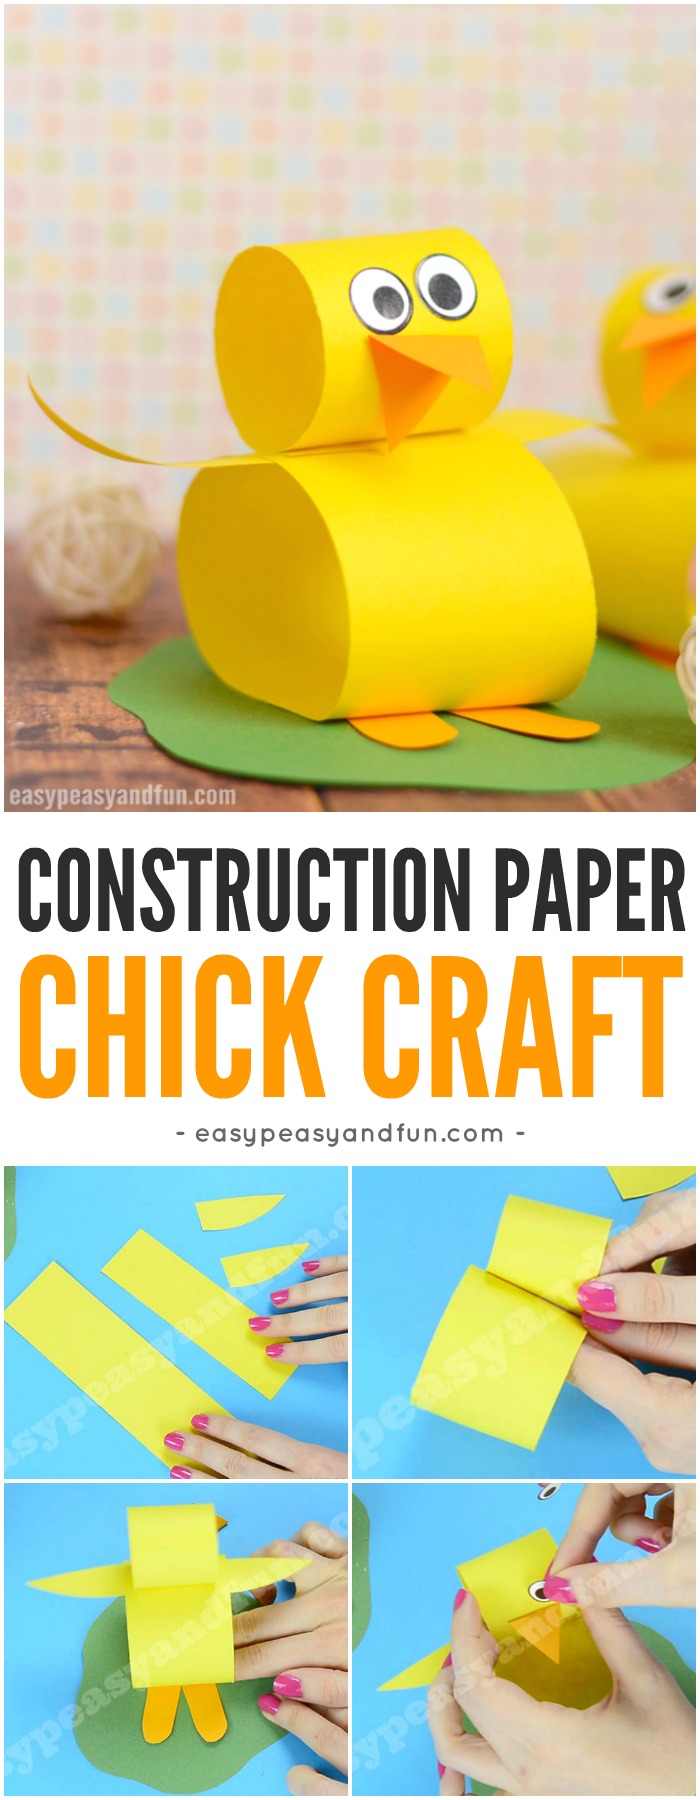 Cute Construction Paper Chick Crafts for Kids #Eastecraft #papercraft #craftforkids